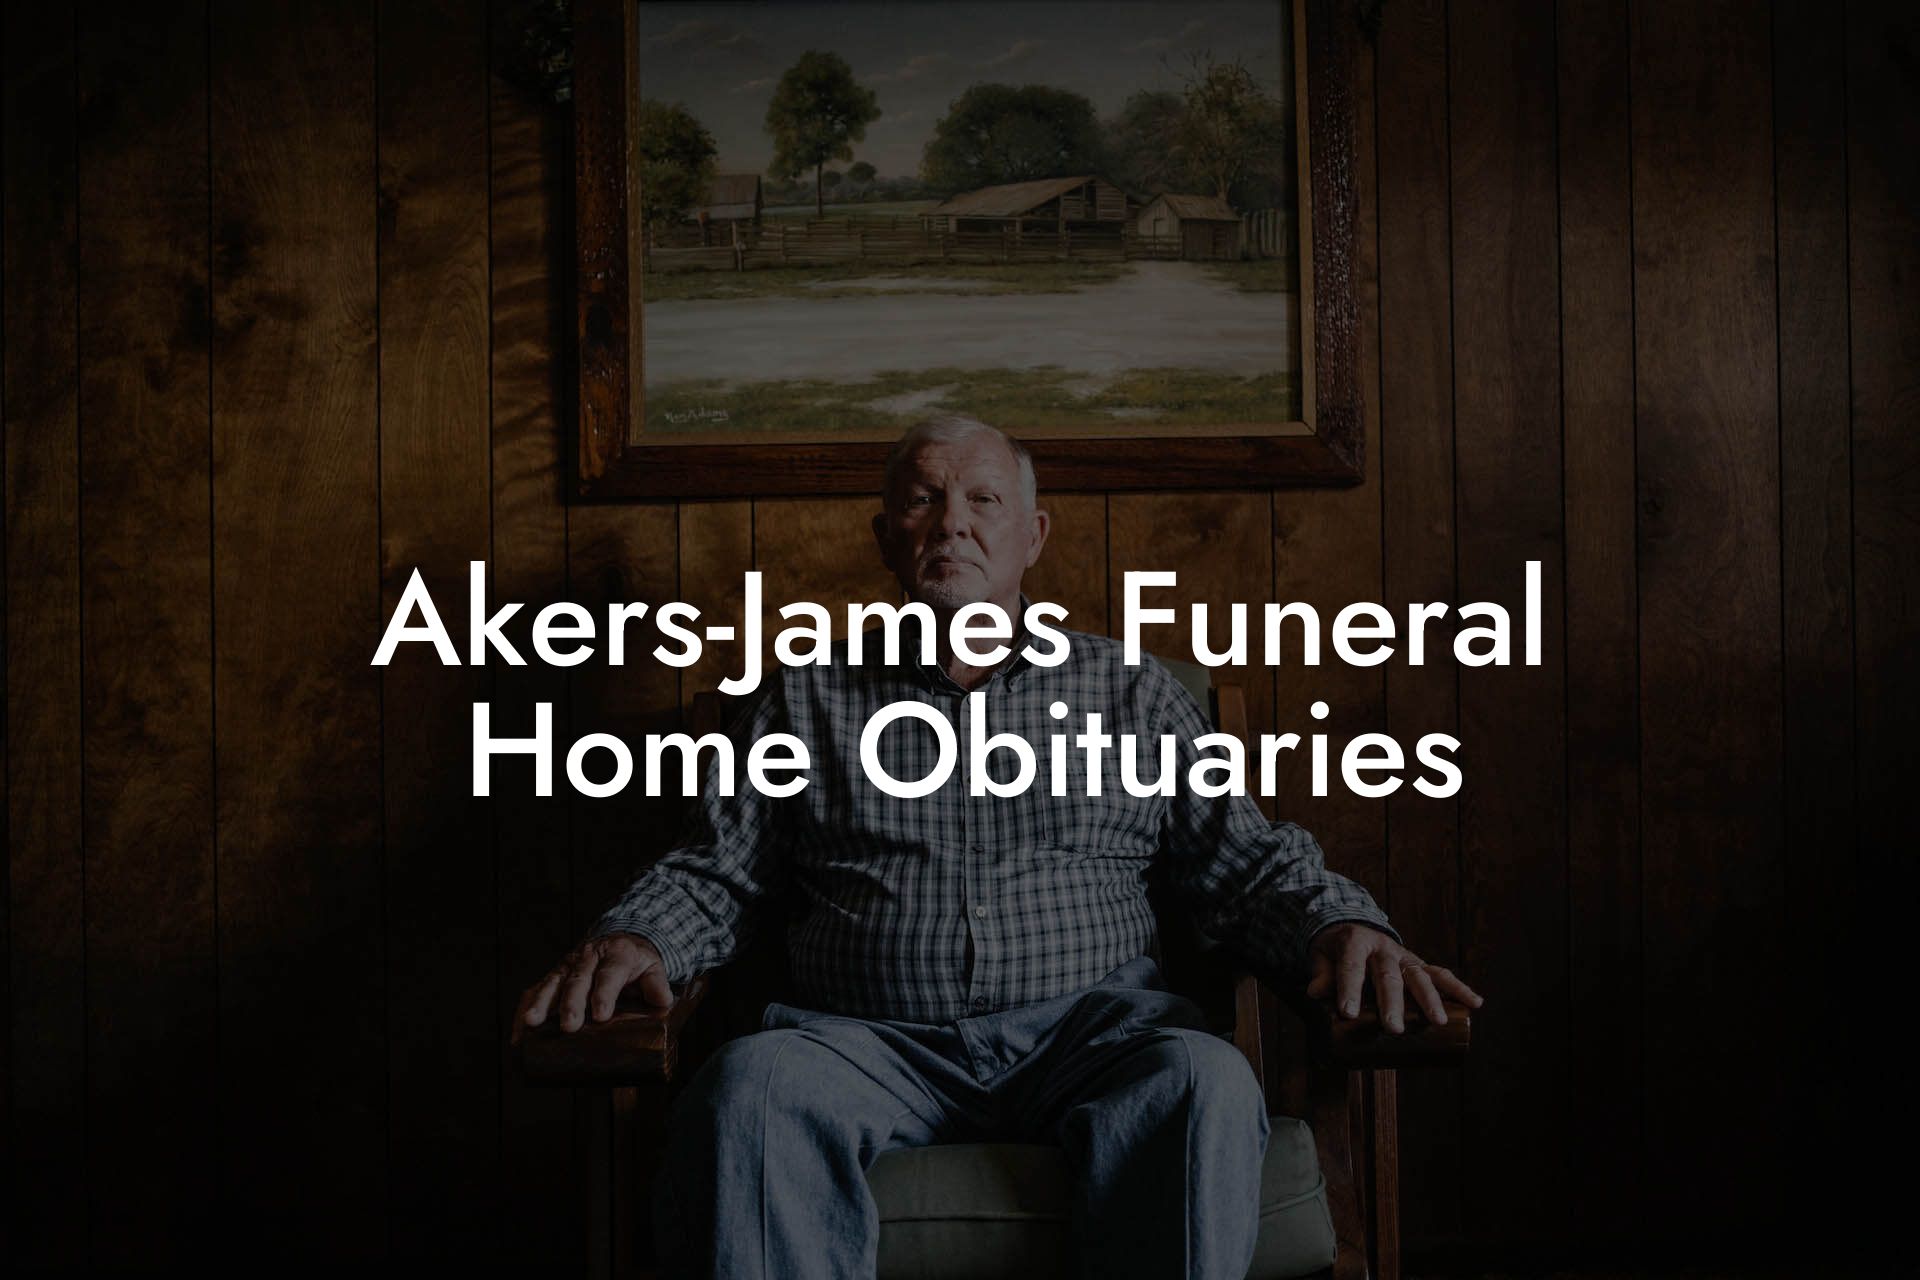 Akers-James Funeral Home Obituaries